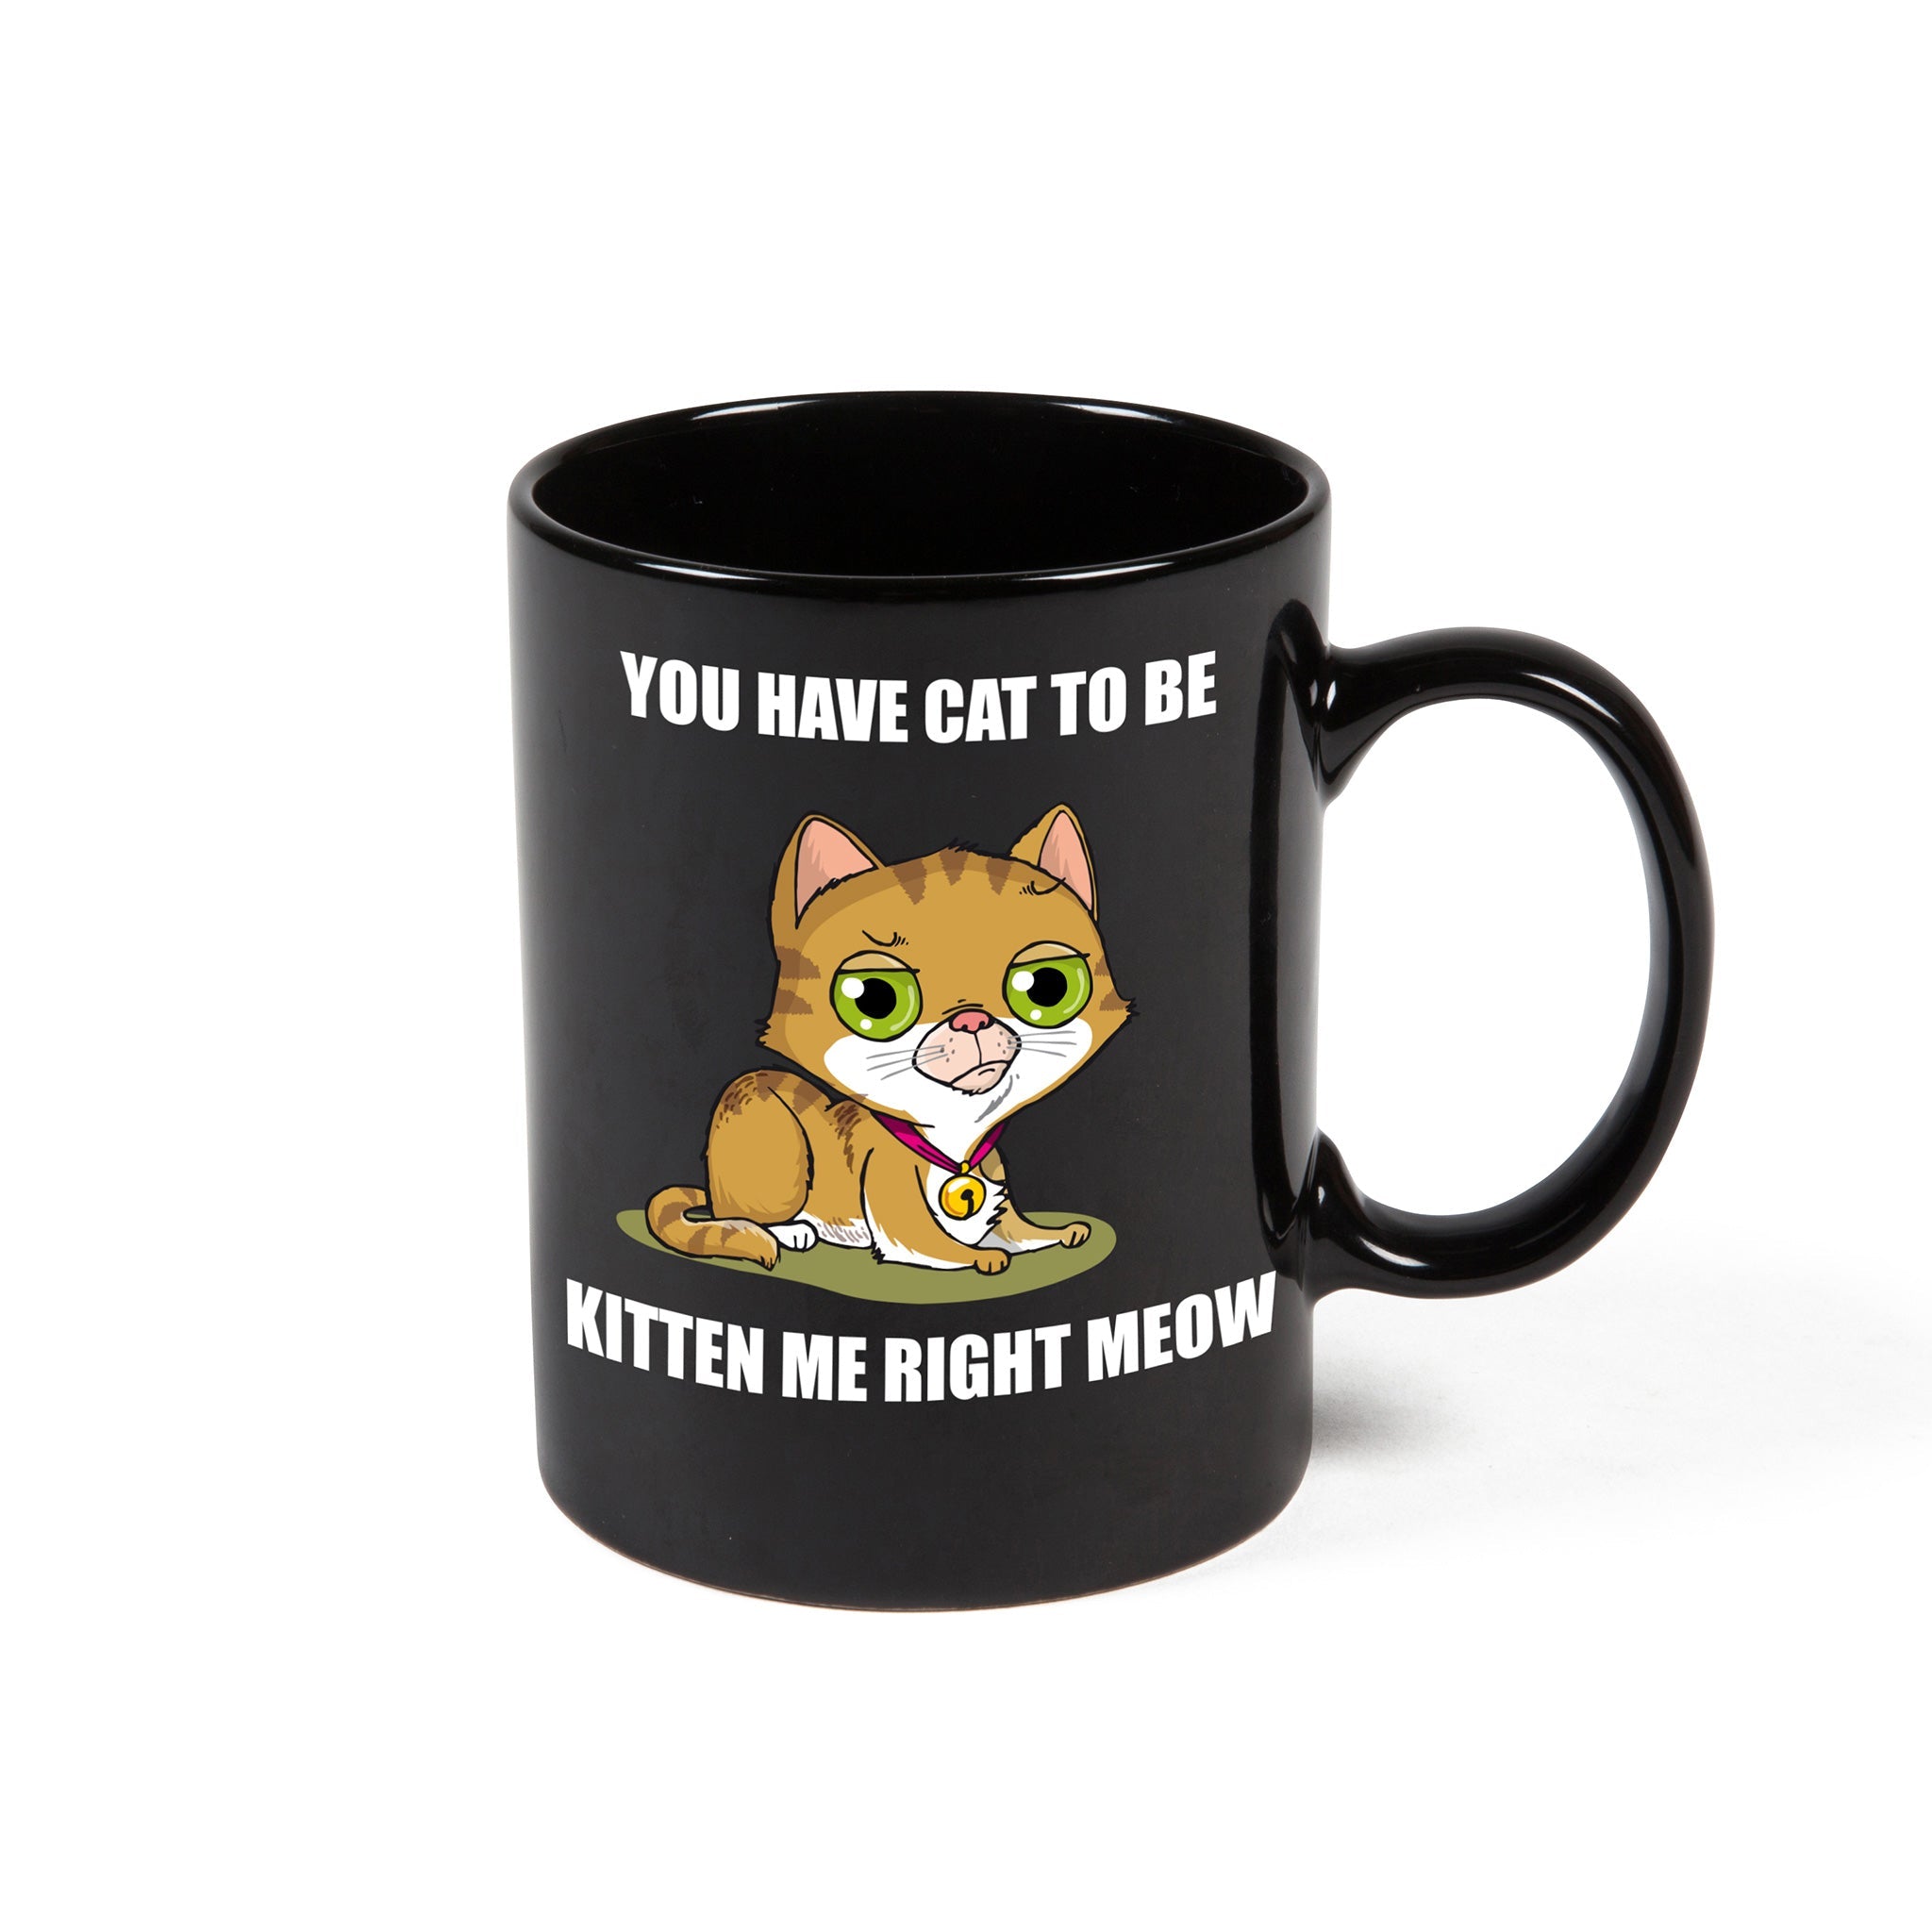 The Color Changing Kitten Mug